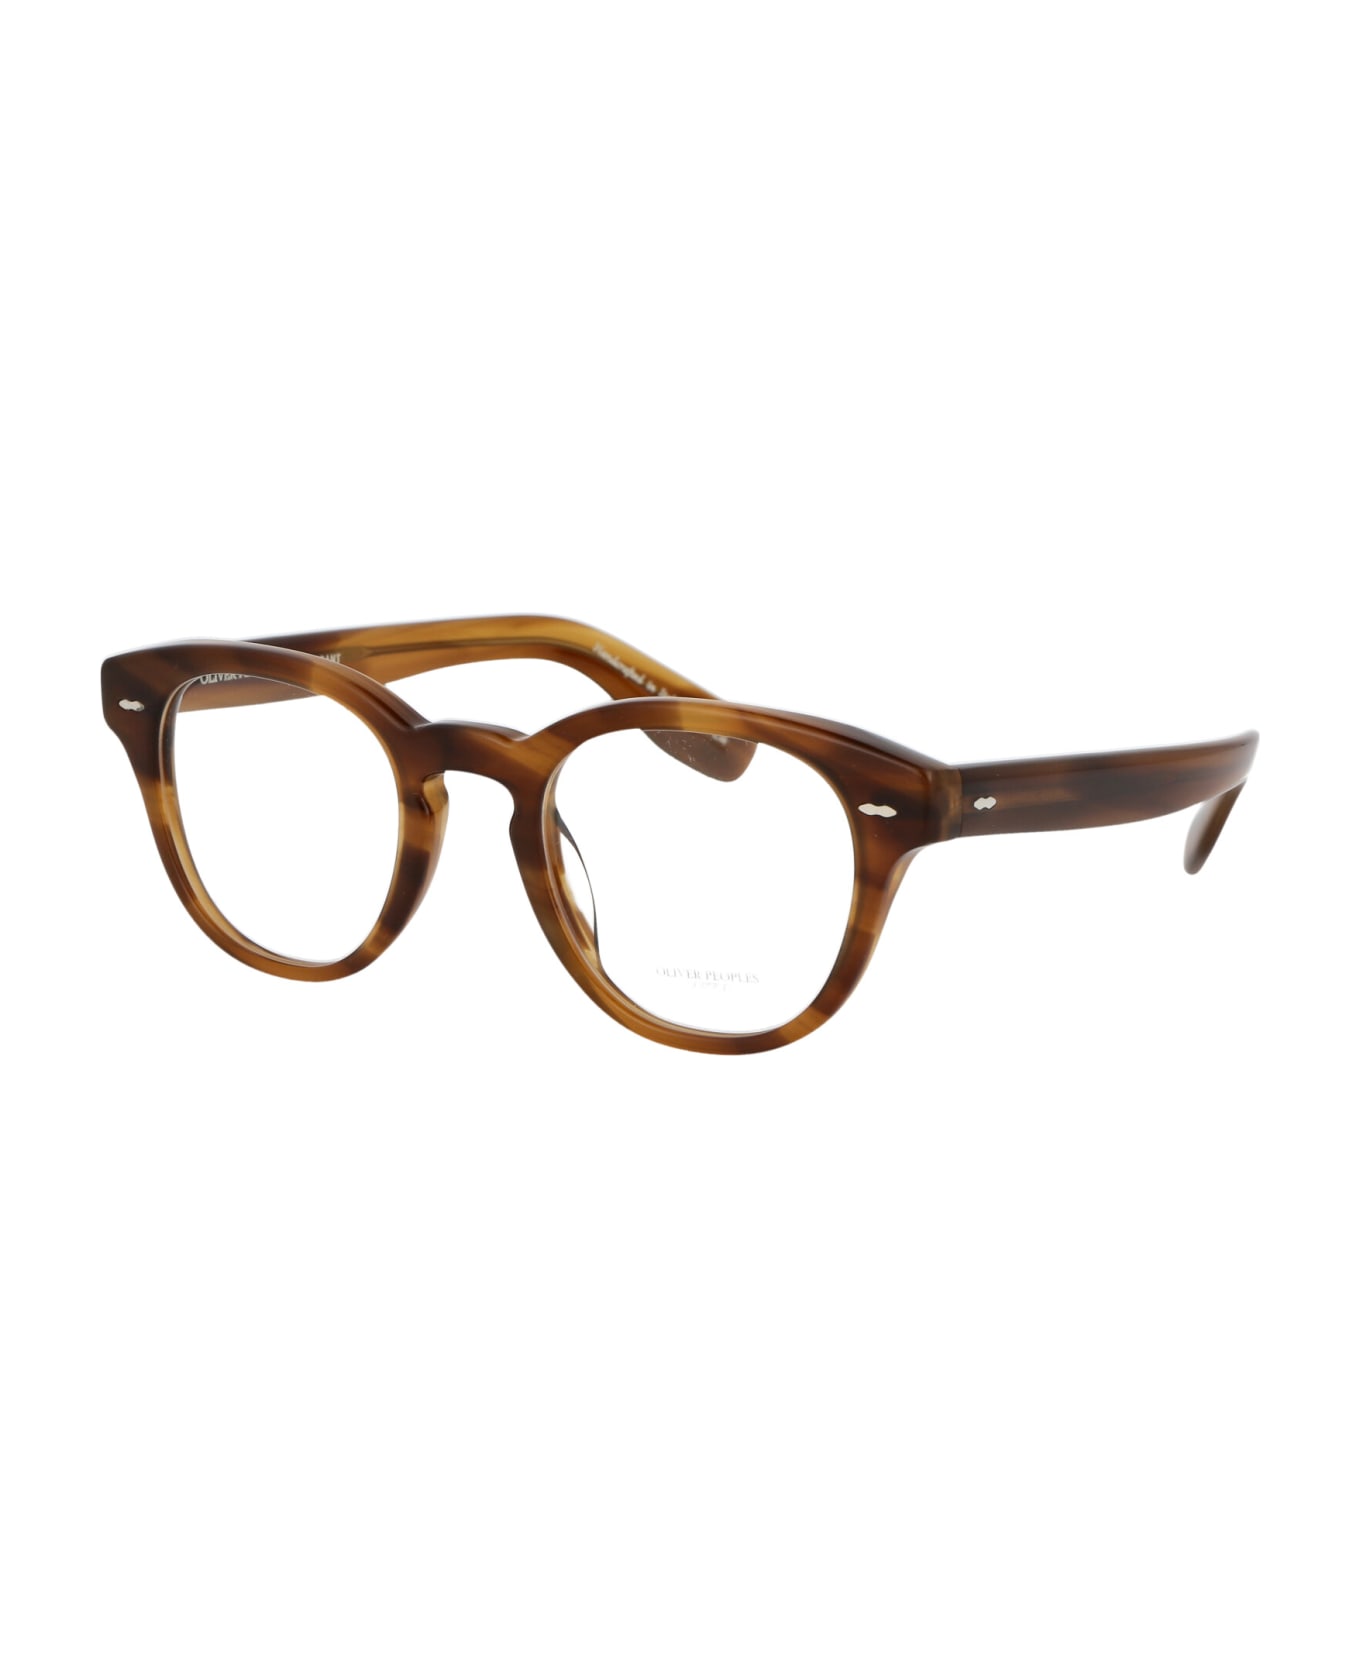 Oliver Peoples Cary Grant Glasses - 1011 RAINTREE アイウェア